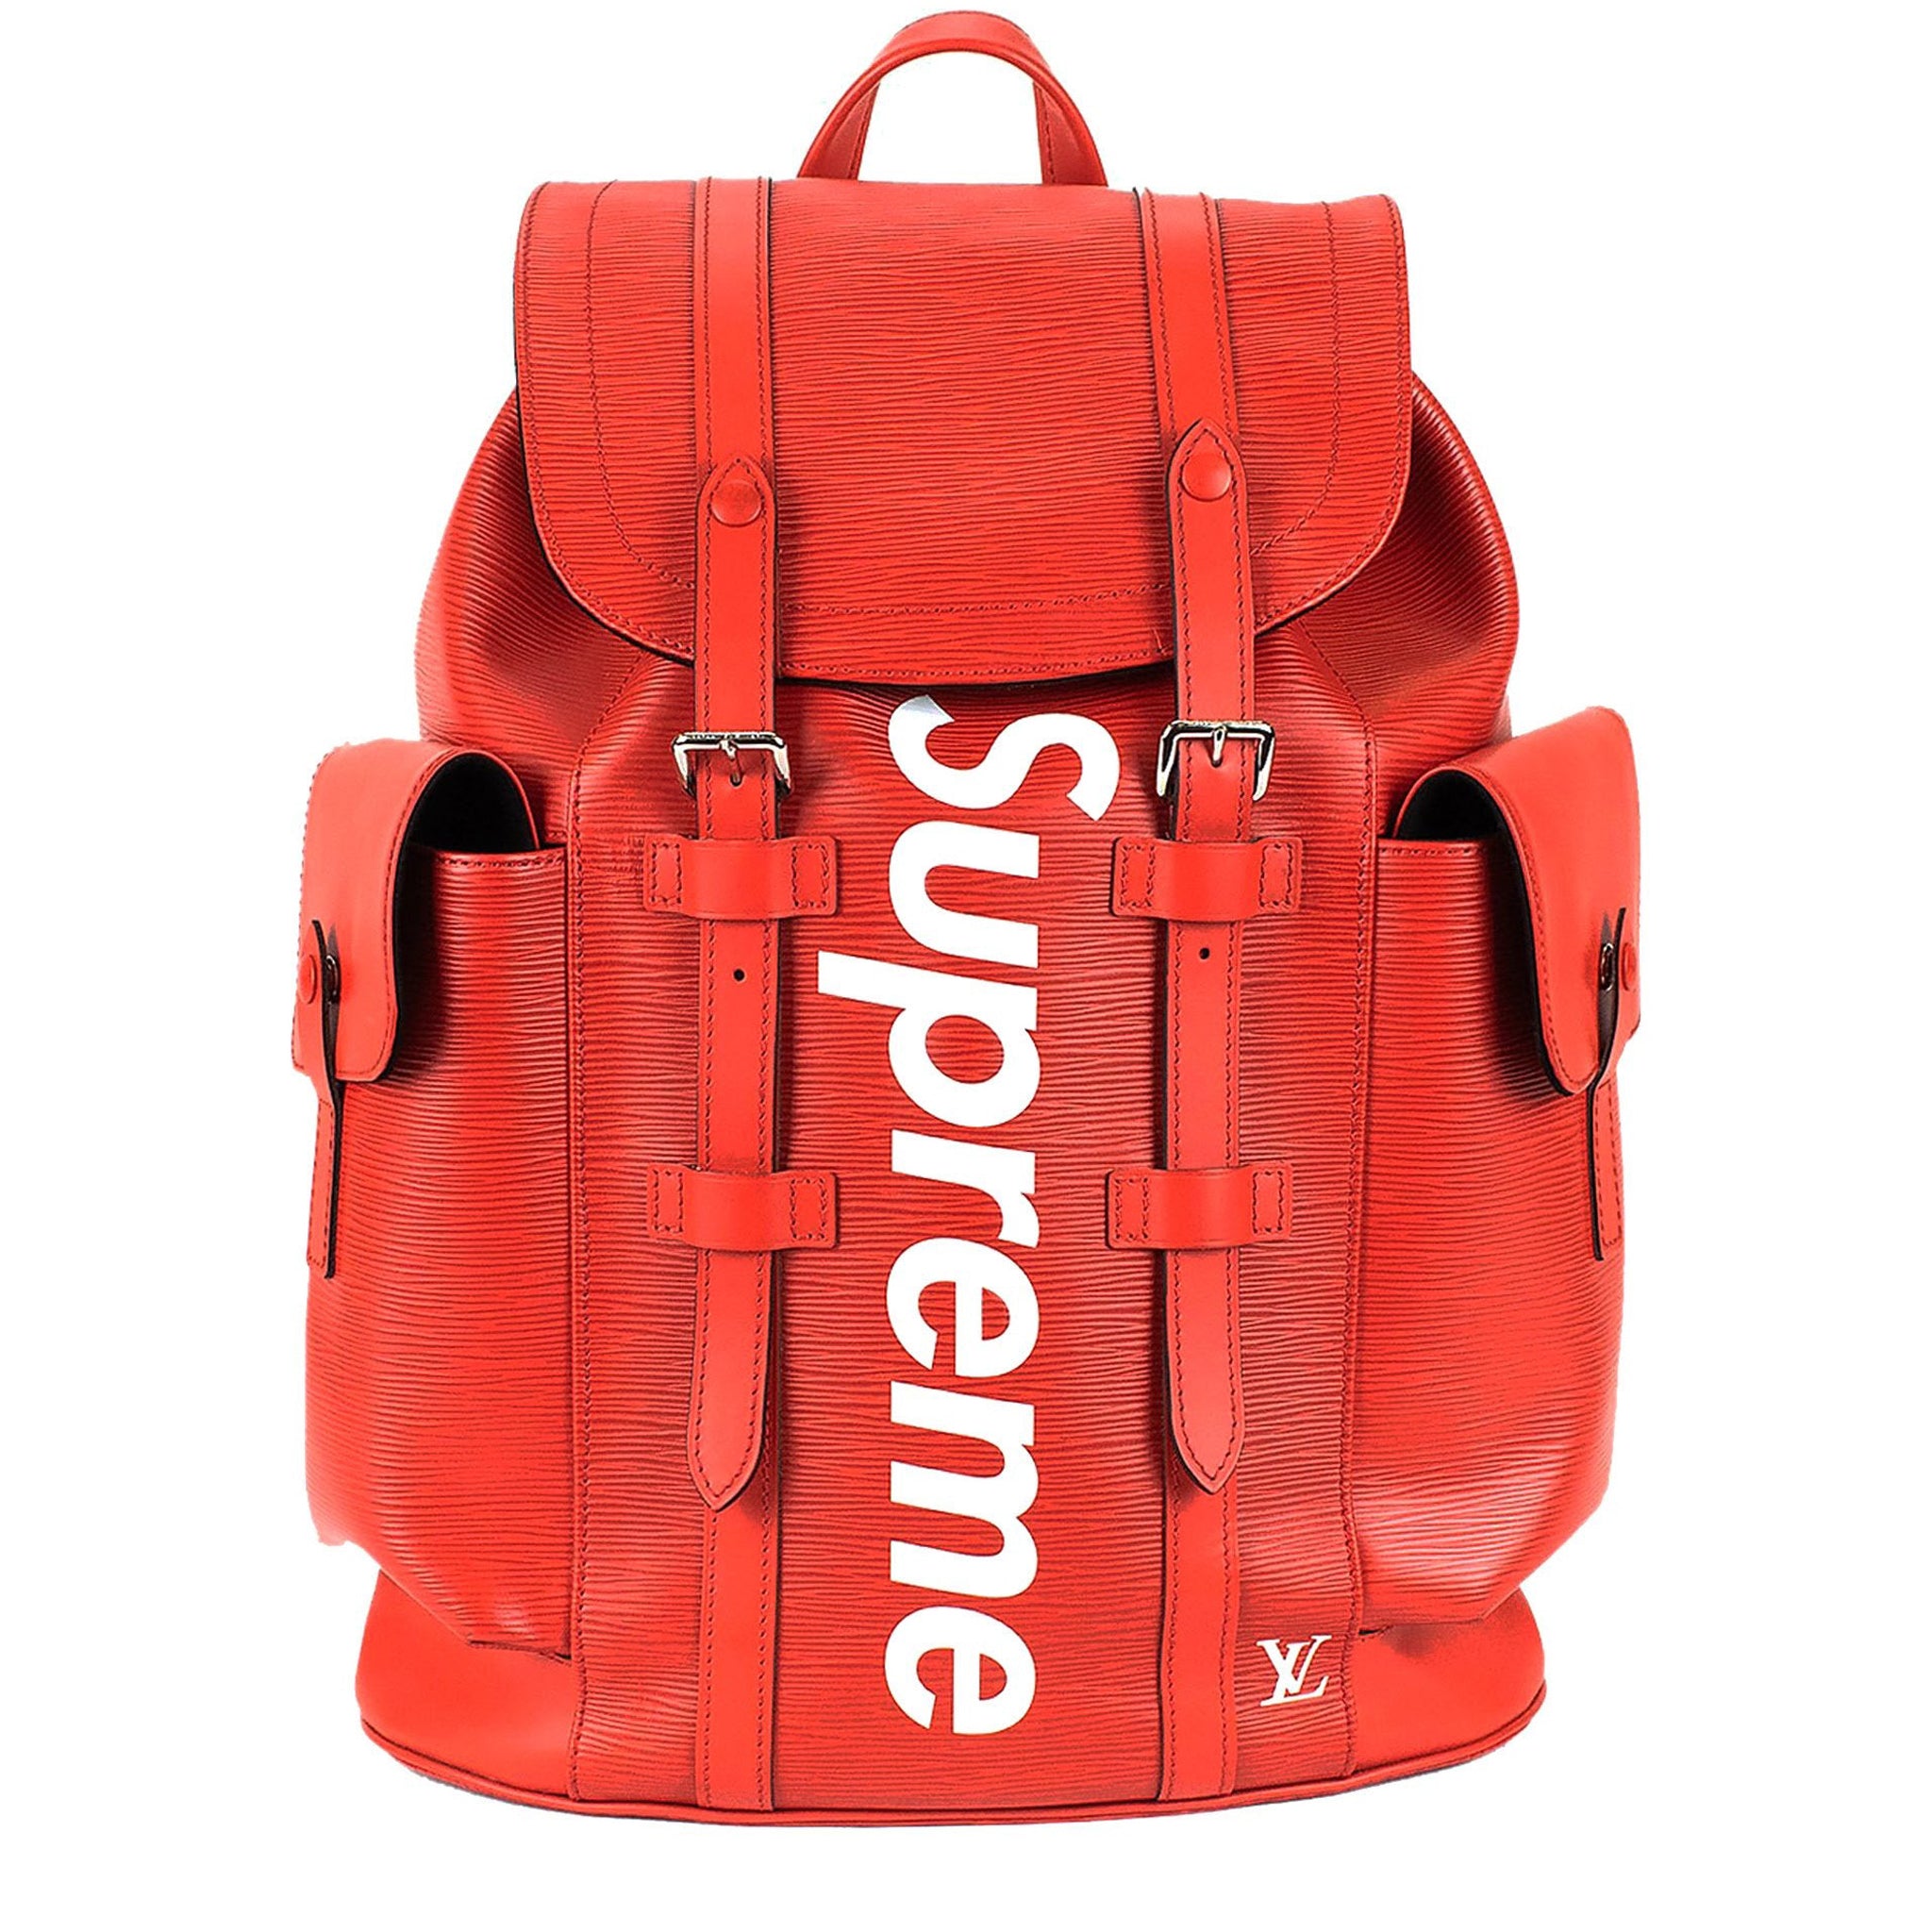 lv supreme bag price